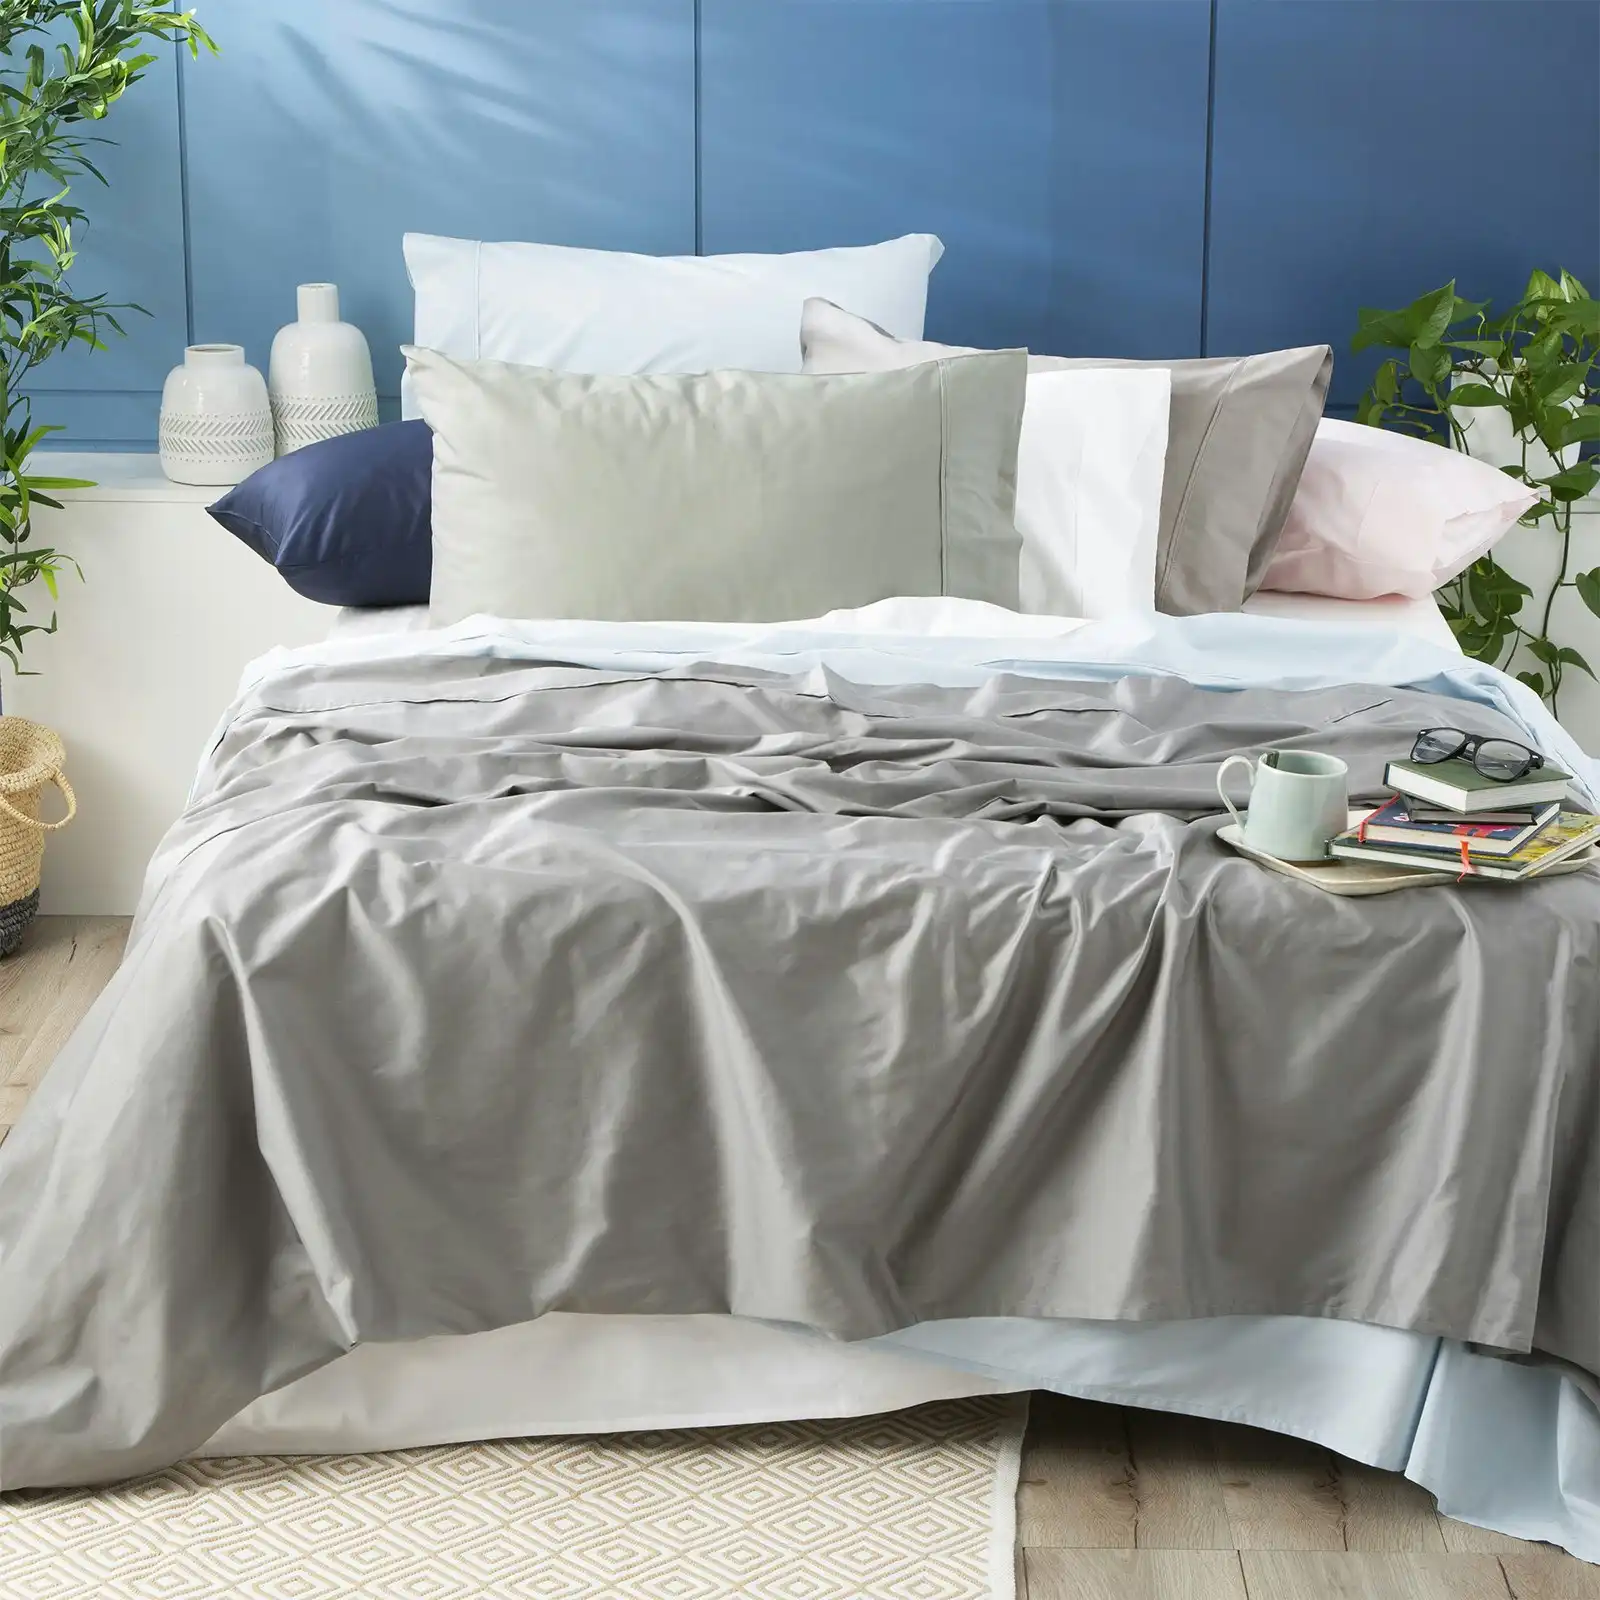 Park Avenue Queen Sheet/Pillowcases Set 500TC Bamboo Cotton Bedding Charcoal